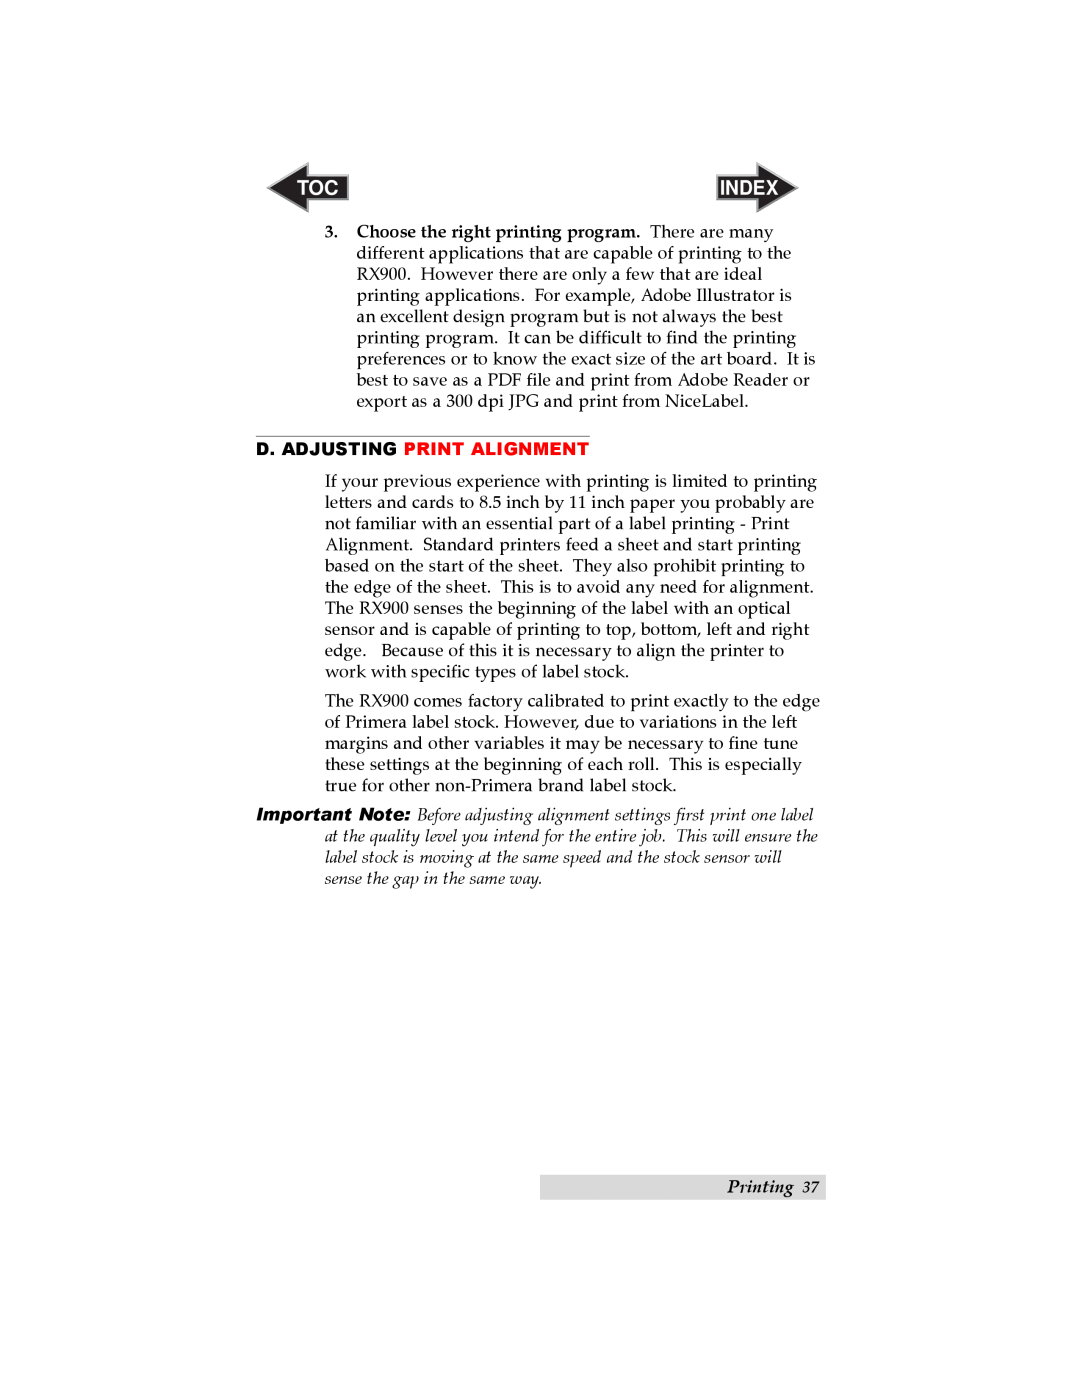 Primera Technology RX900 user manual D. Adjusting Print Alignment, Index, Printing 